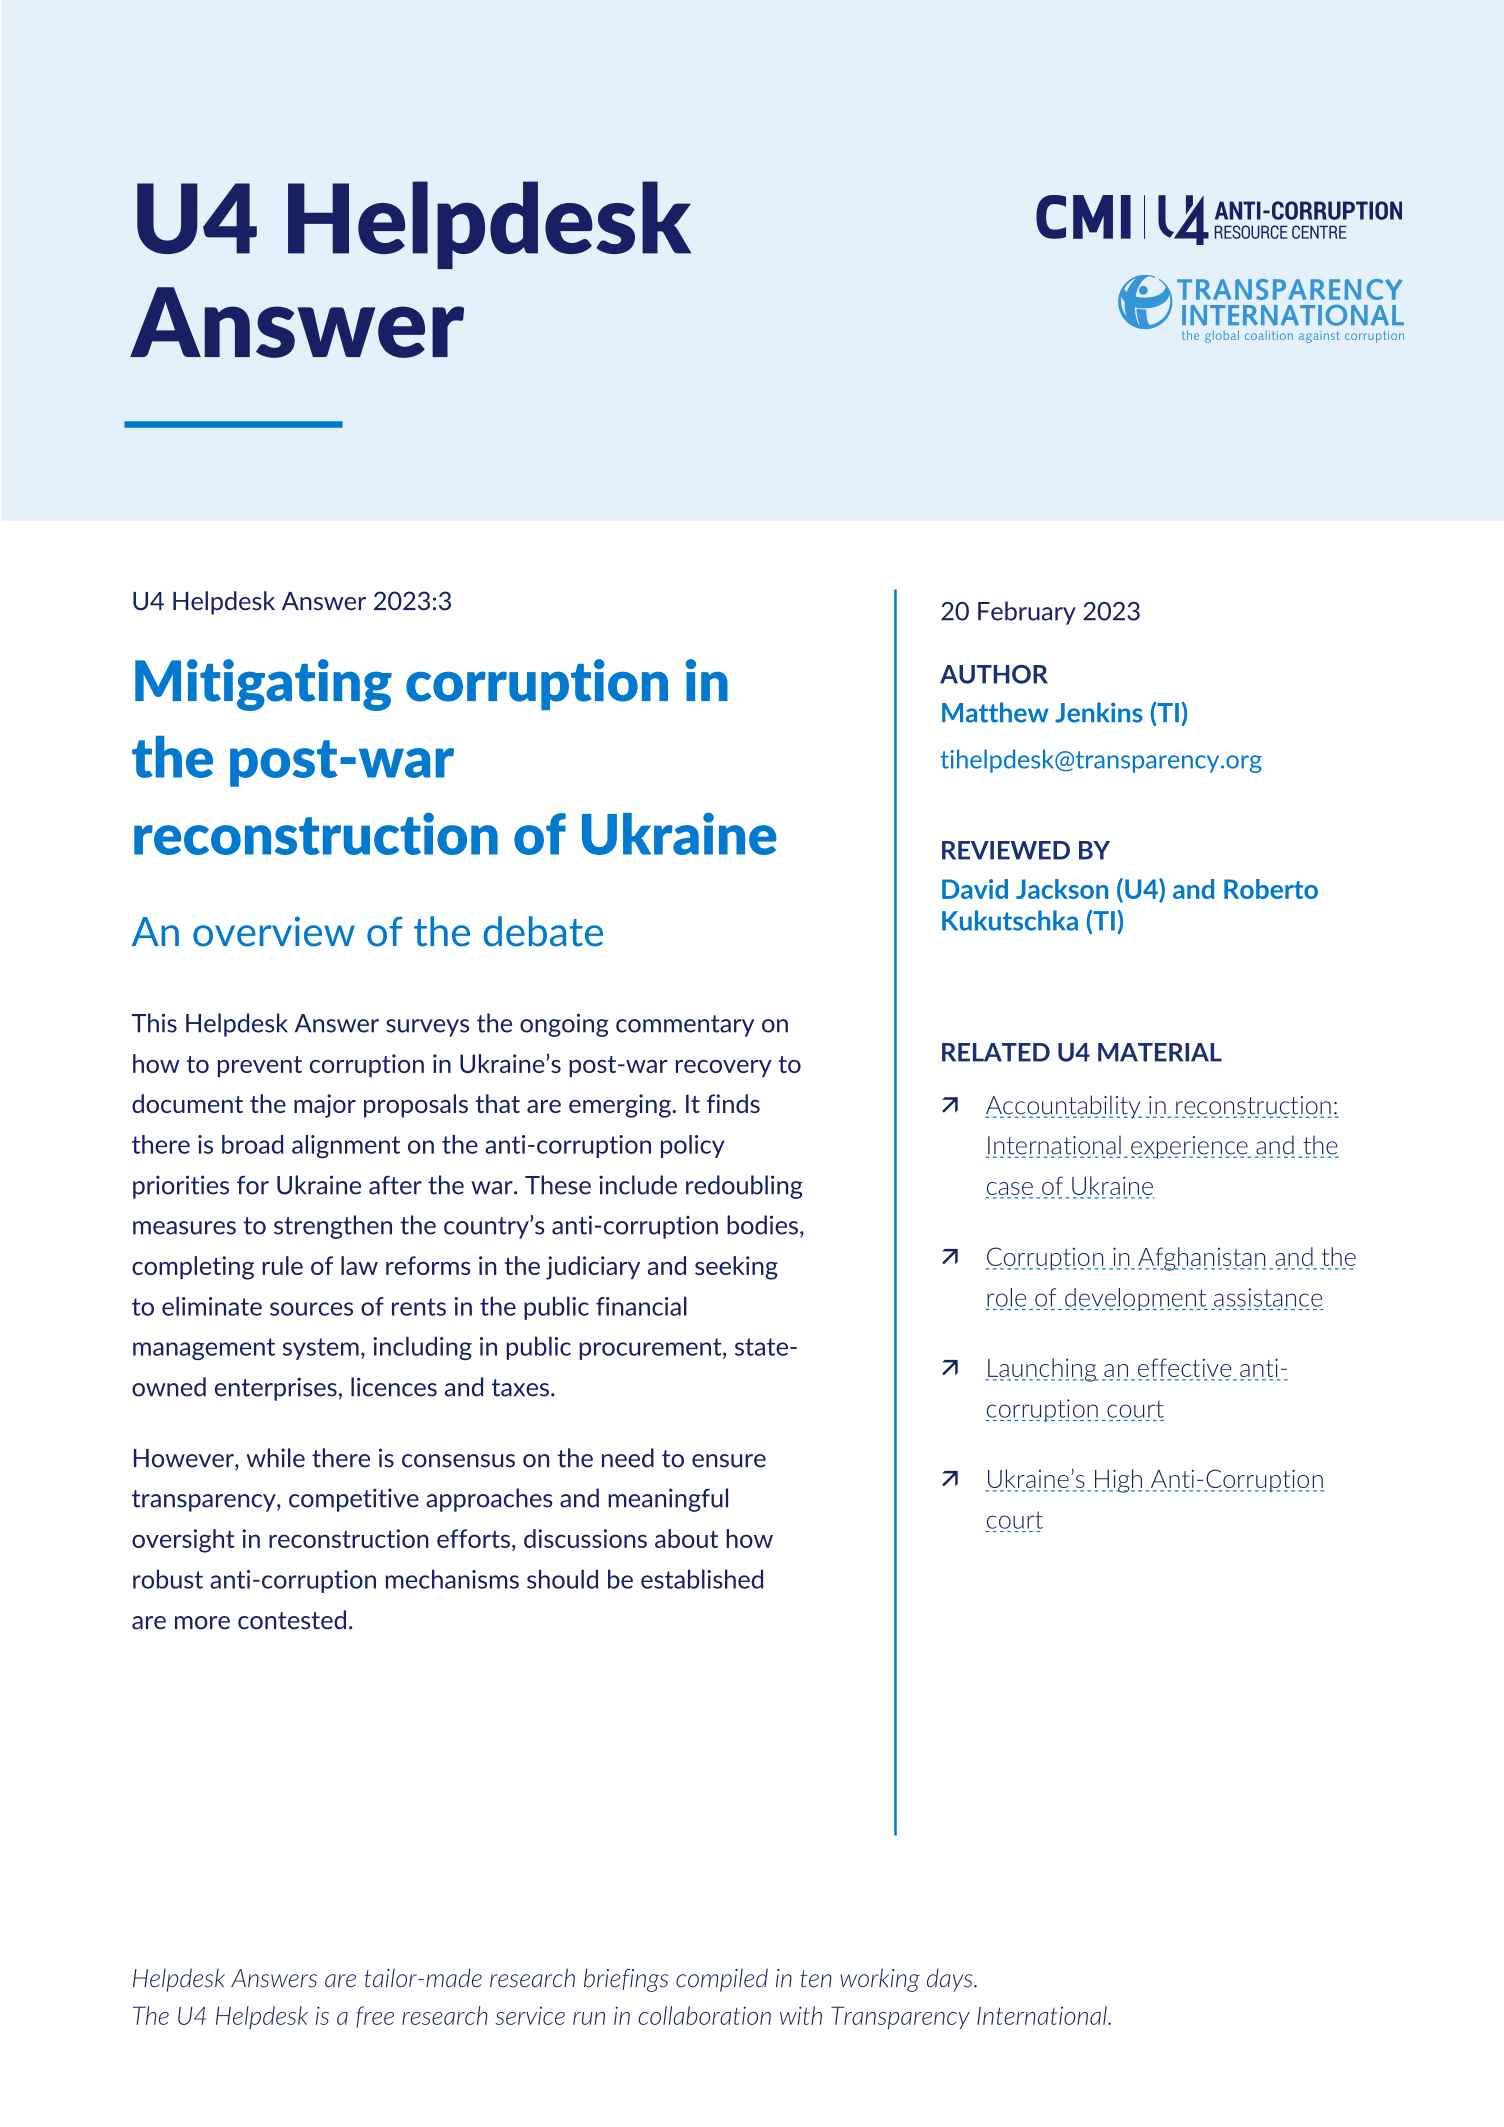 Mitigating corruption in the post-war reconstruction of Ukraine